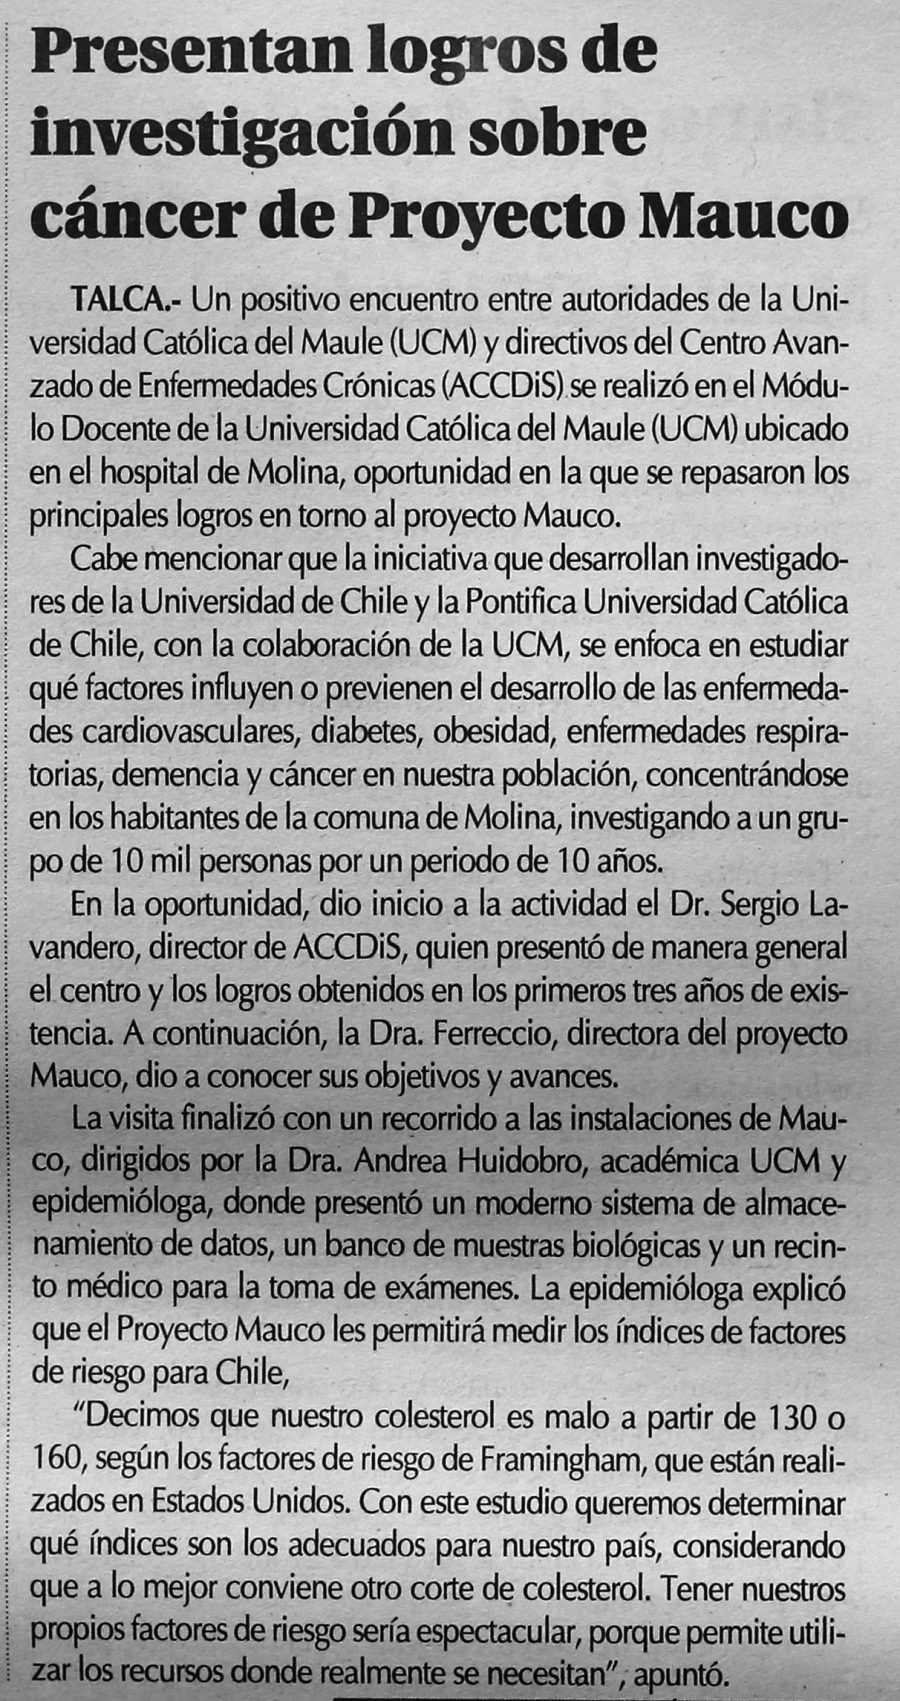 25 de septiembre en Diario El Centro: “Presentan logros de investigación sobre cáncer de Proyecto Mauco”